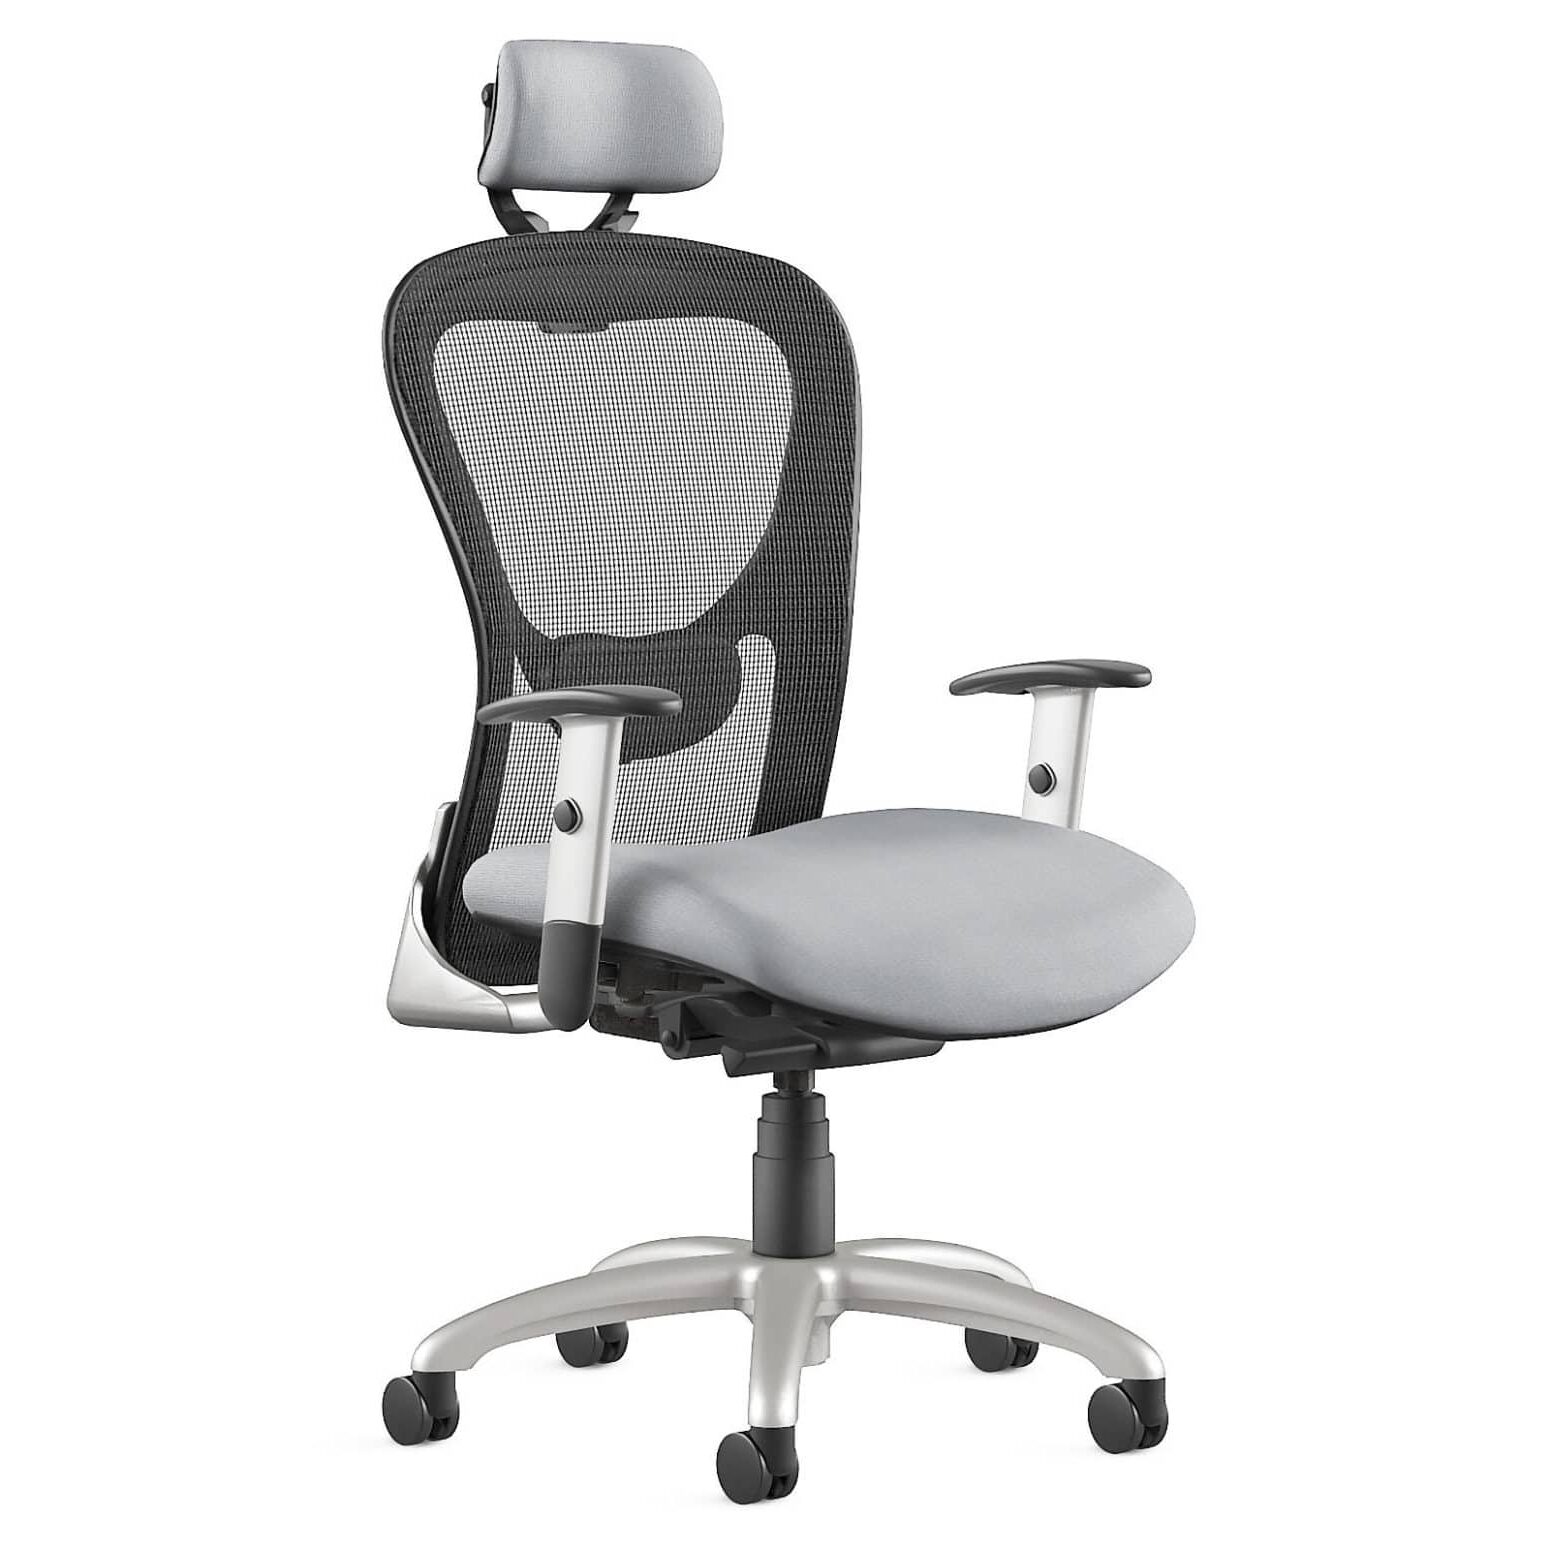 Strata ergonomic office chair is designed for comfort